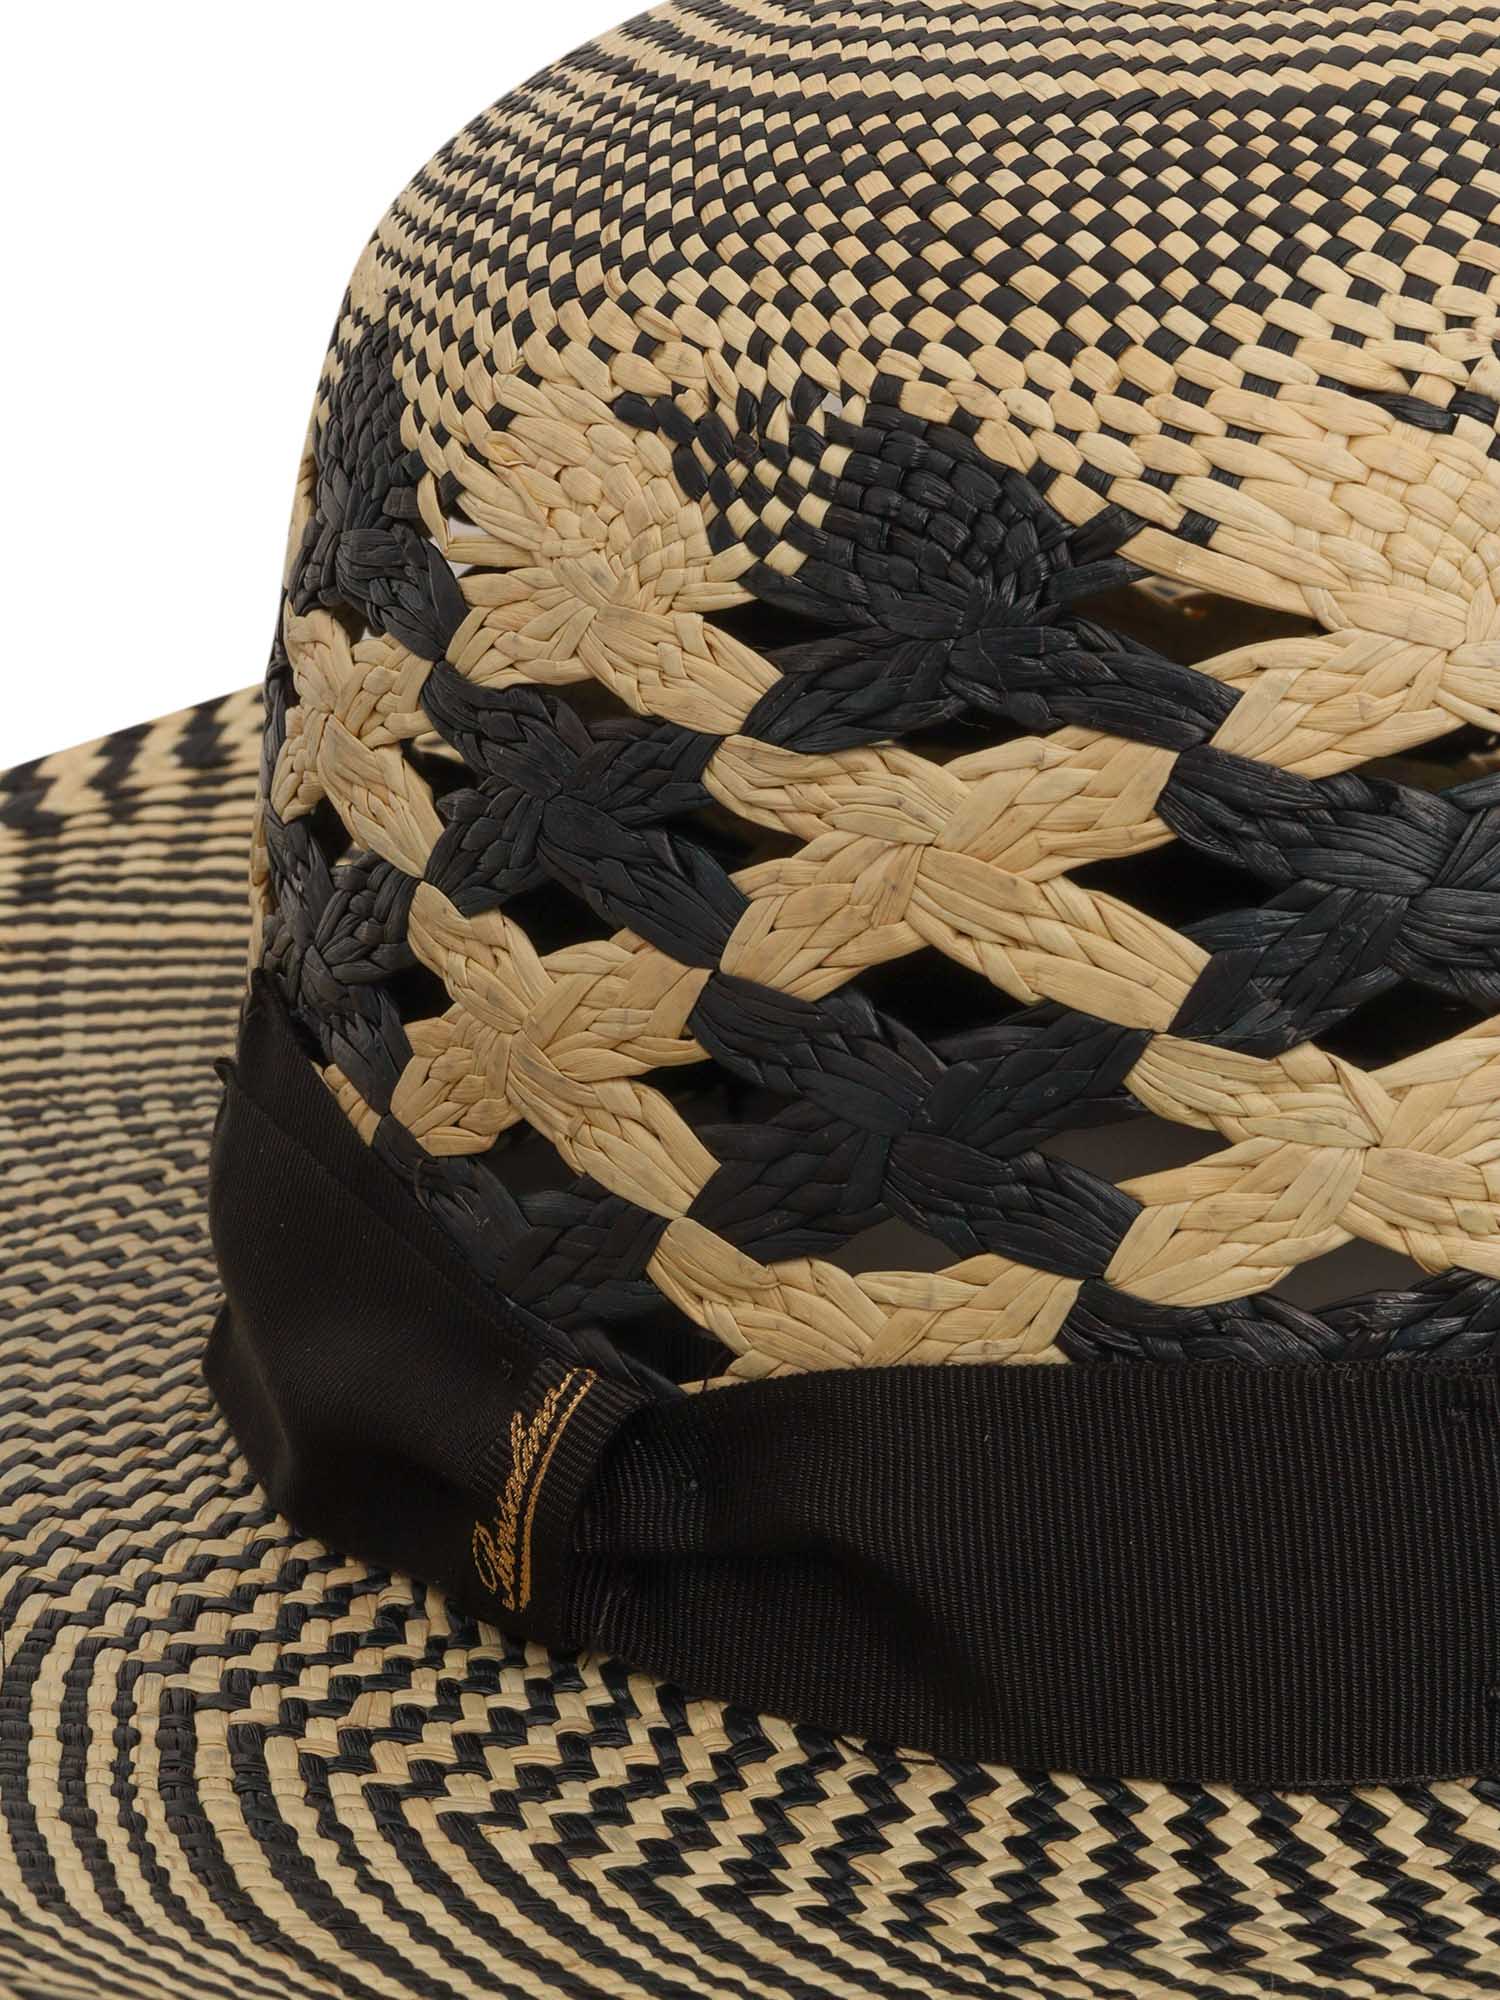 Shop Borsalino Patterned Panama Hat In Black